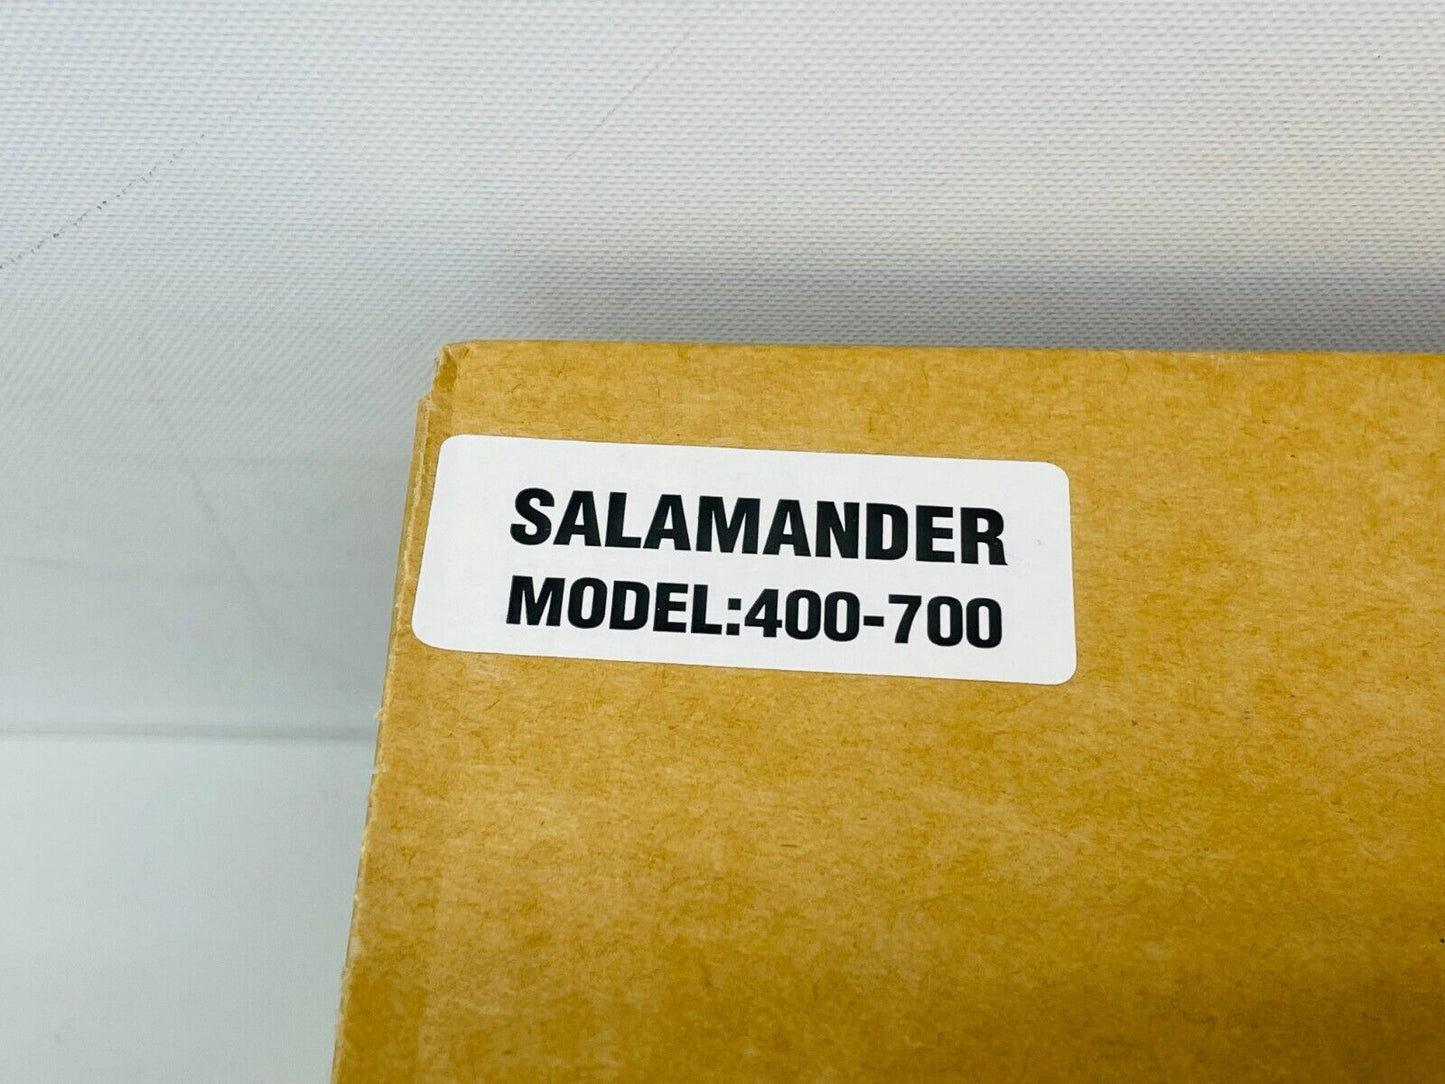 Salamander FPSA/CR Designs Retractable Power Cable Reel